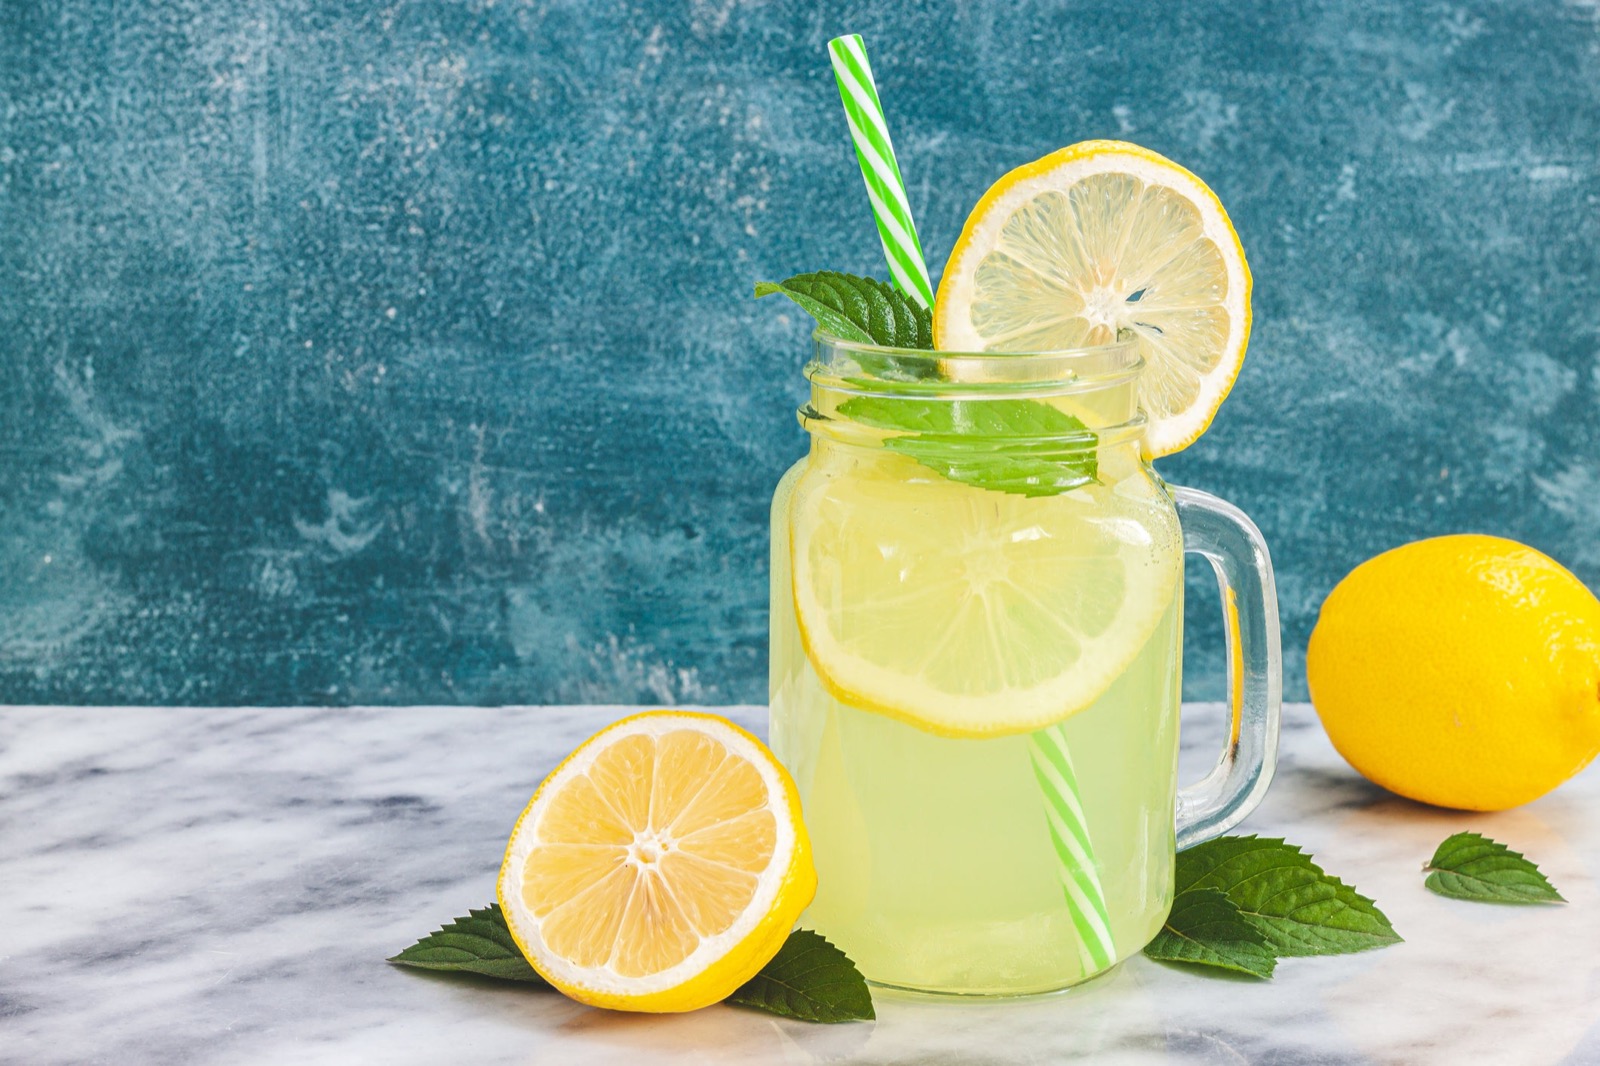 What Dessert Flavor Are You? Lemonade drink